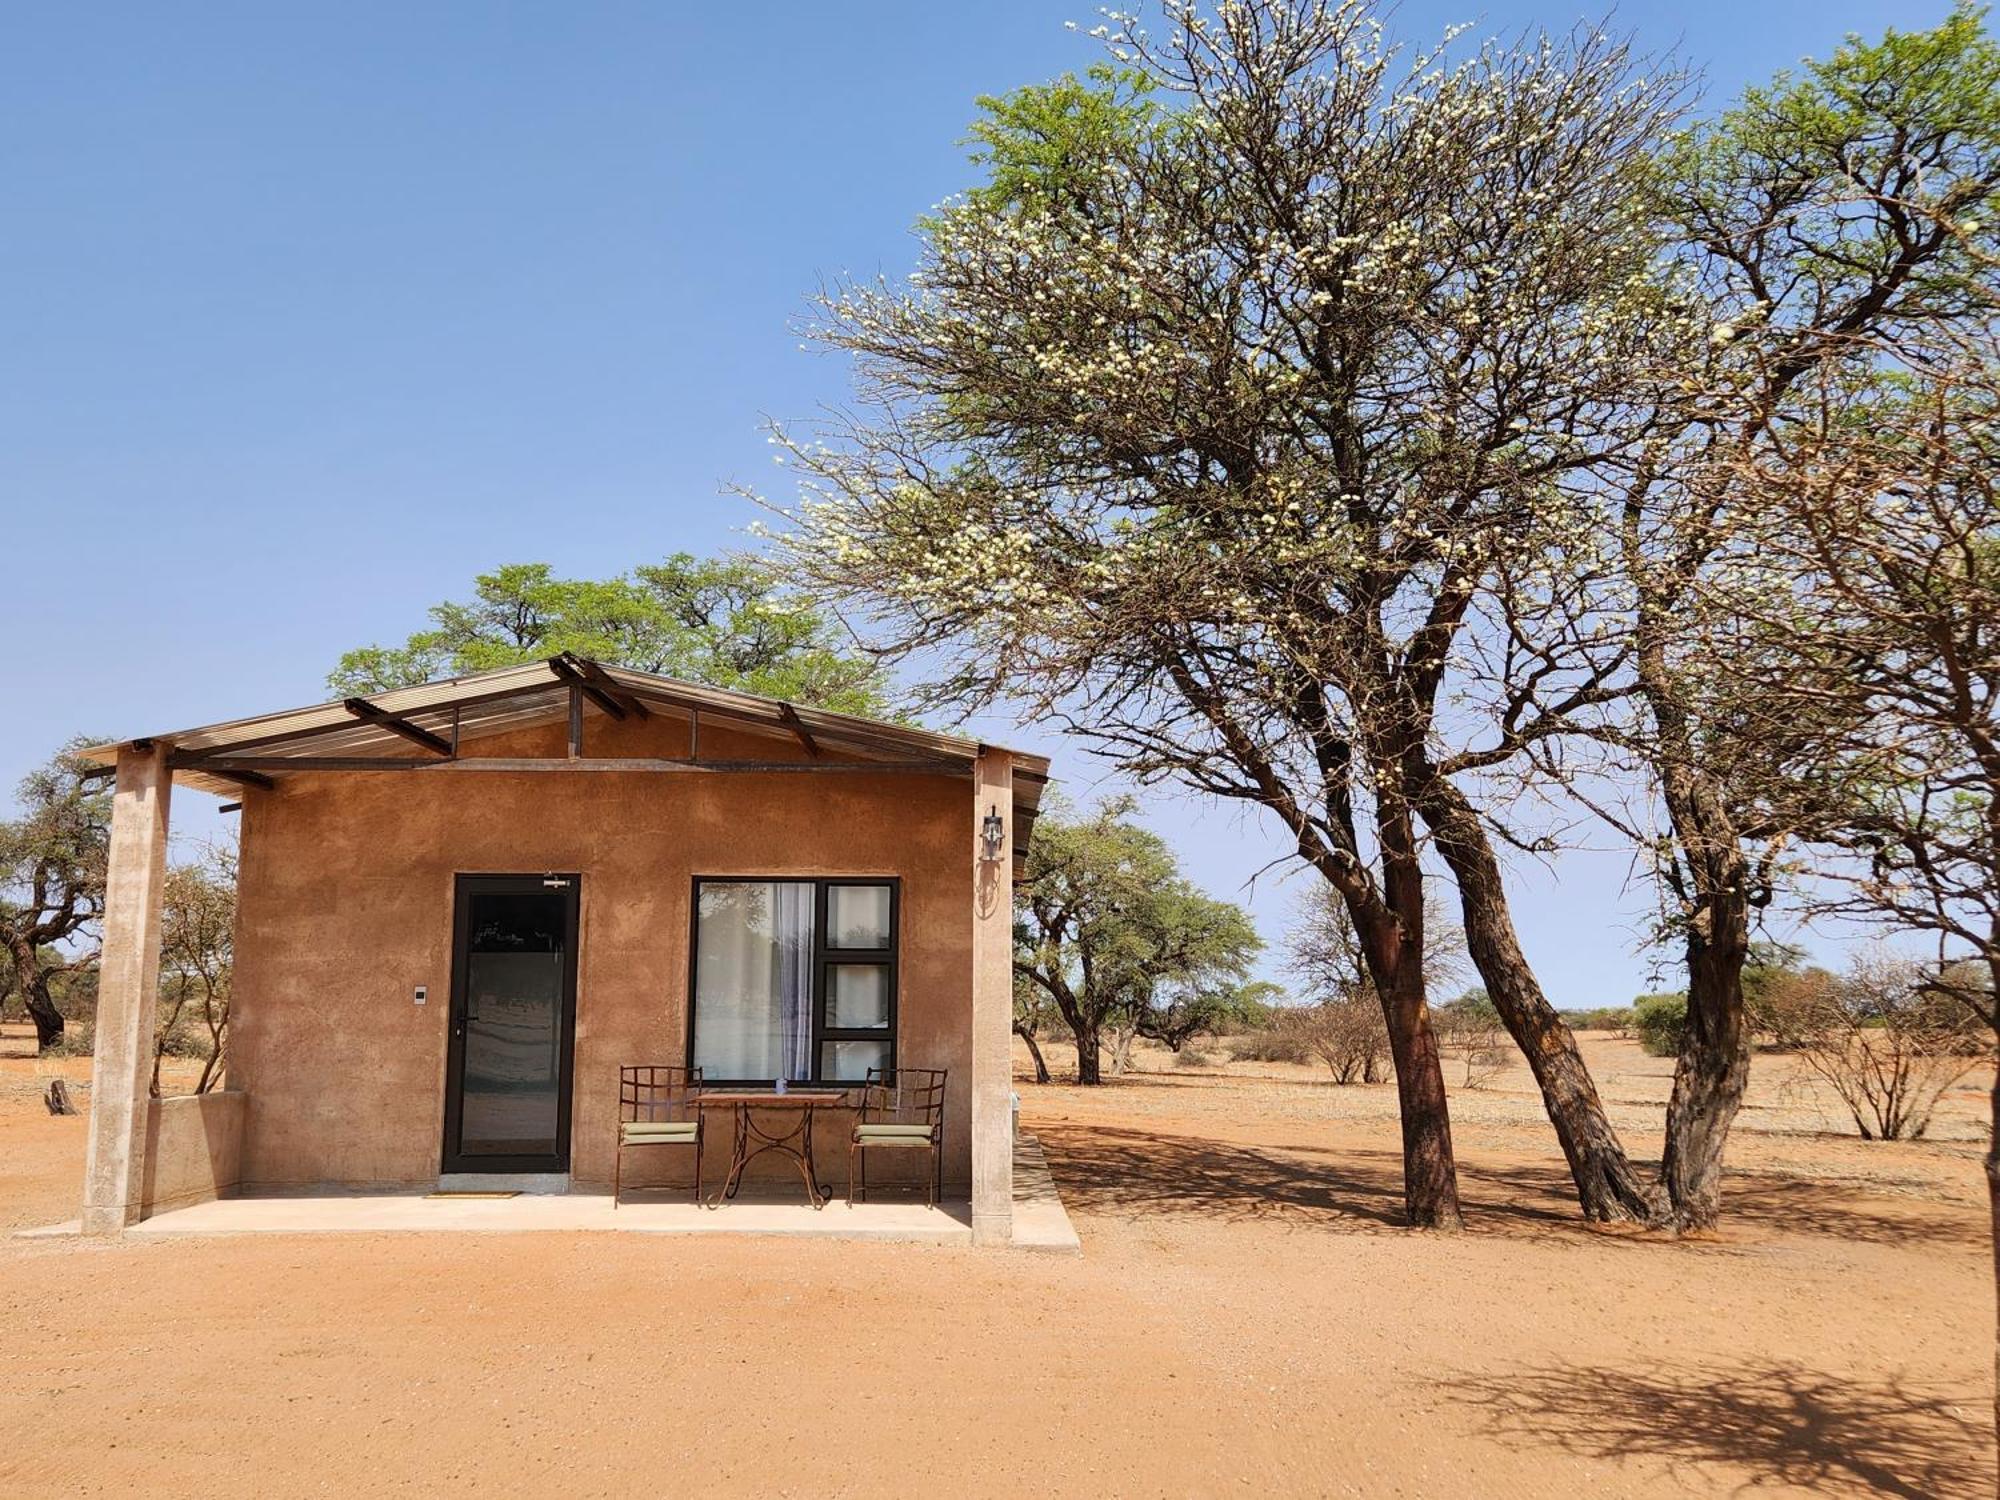 Jansen Kalahari Guest Farm Villa Hoachanas Exterior photo